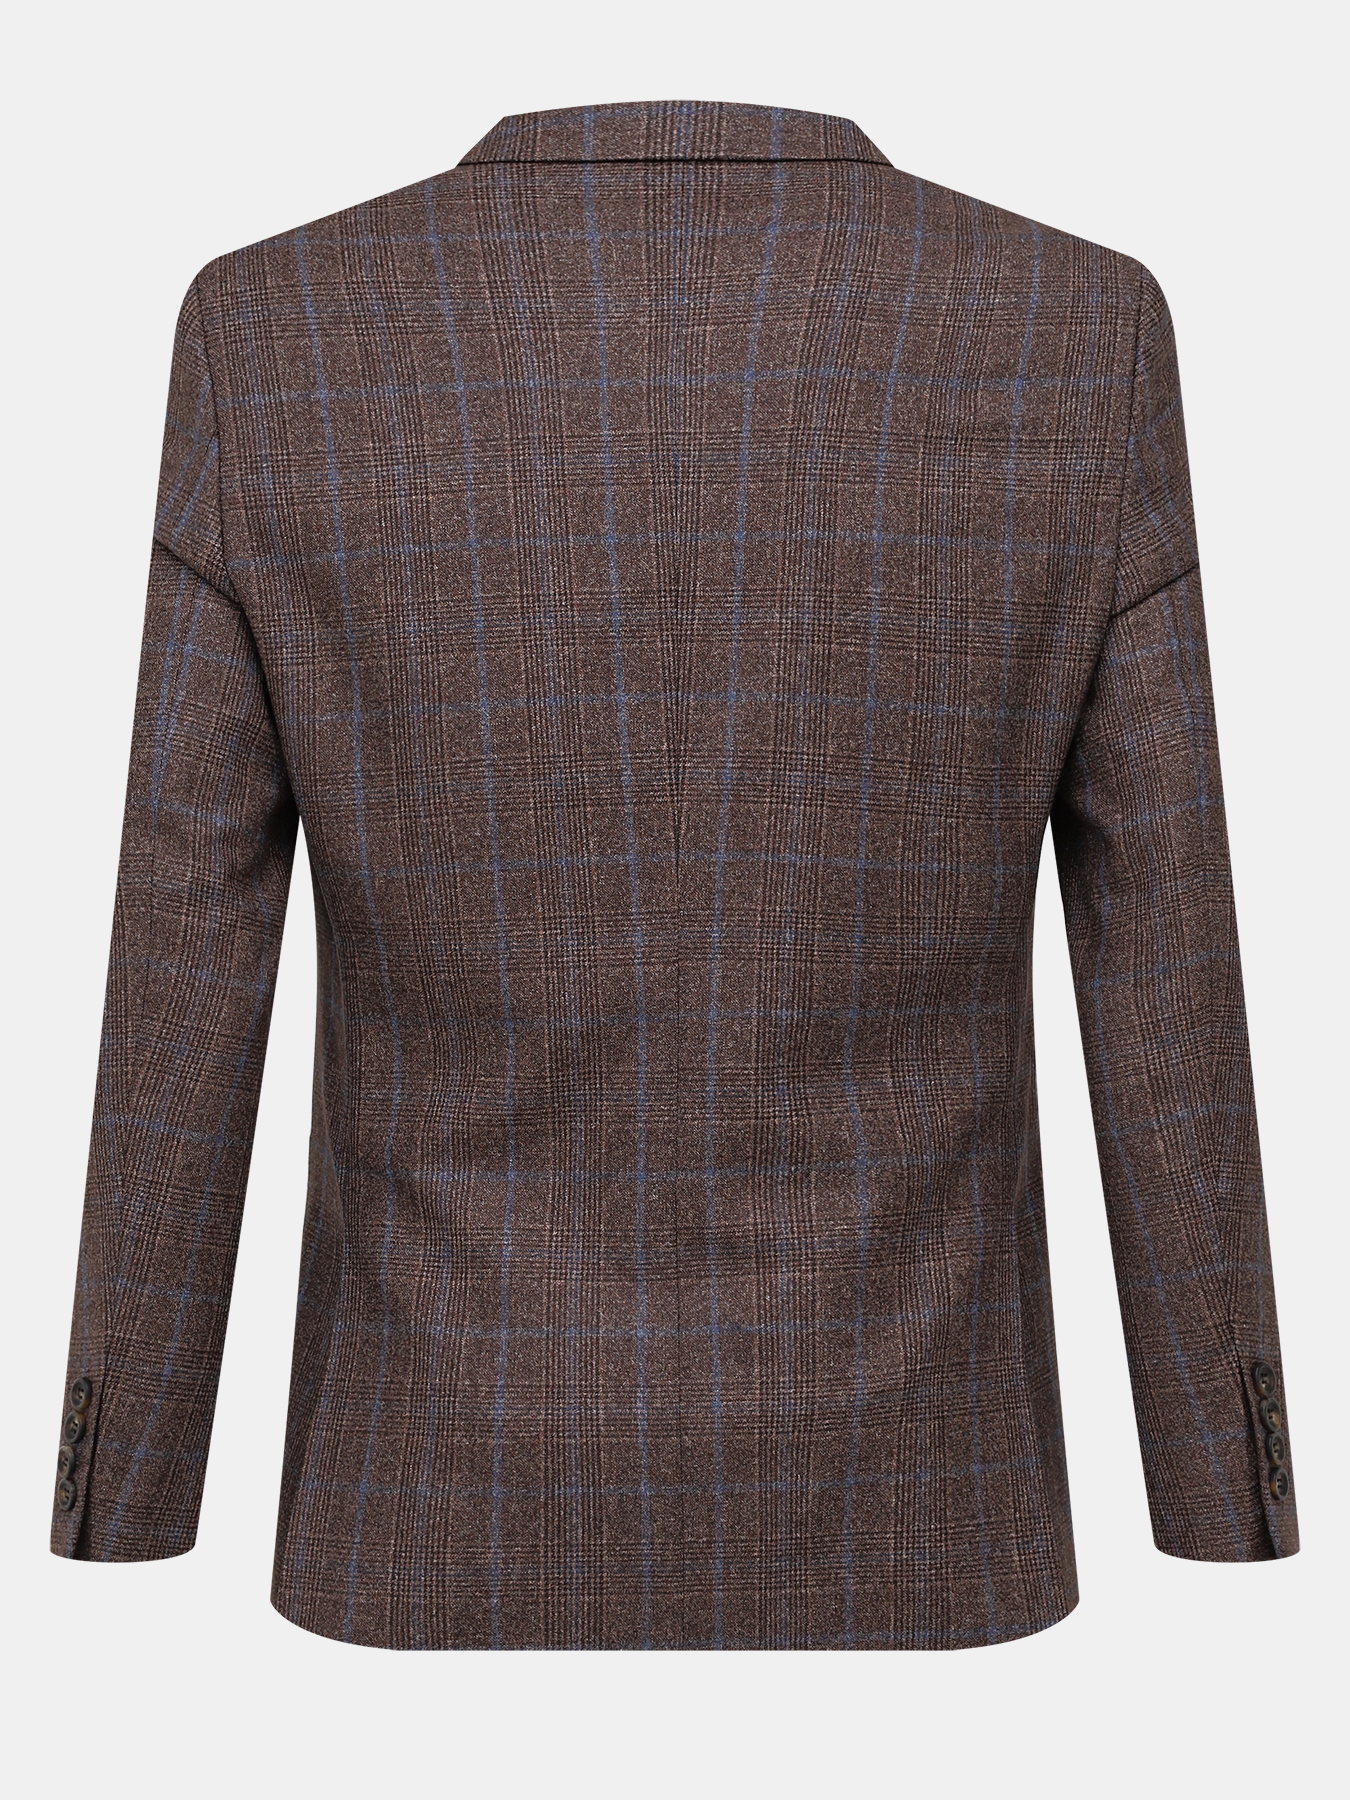 Пиджак Alessandro Manzoni 388767-064, цвет коричневый, размер 58 - фото 2